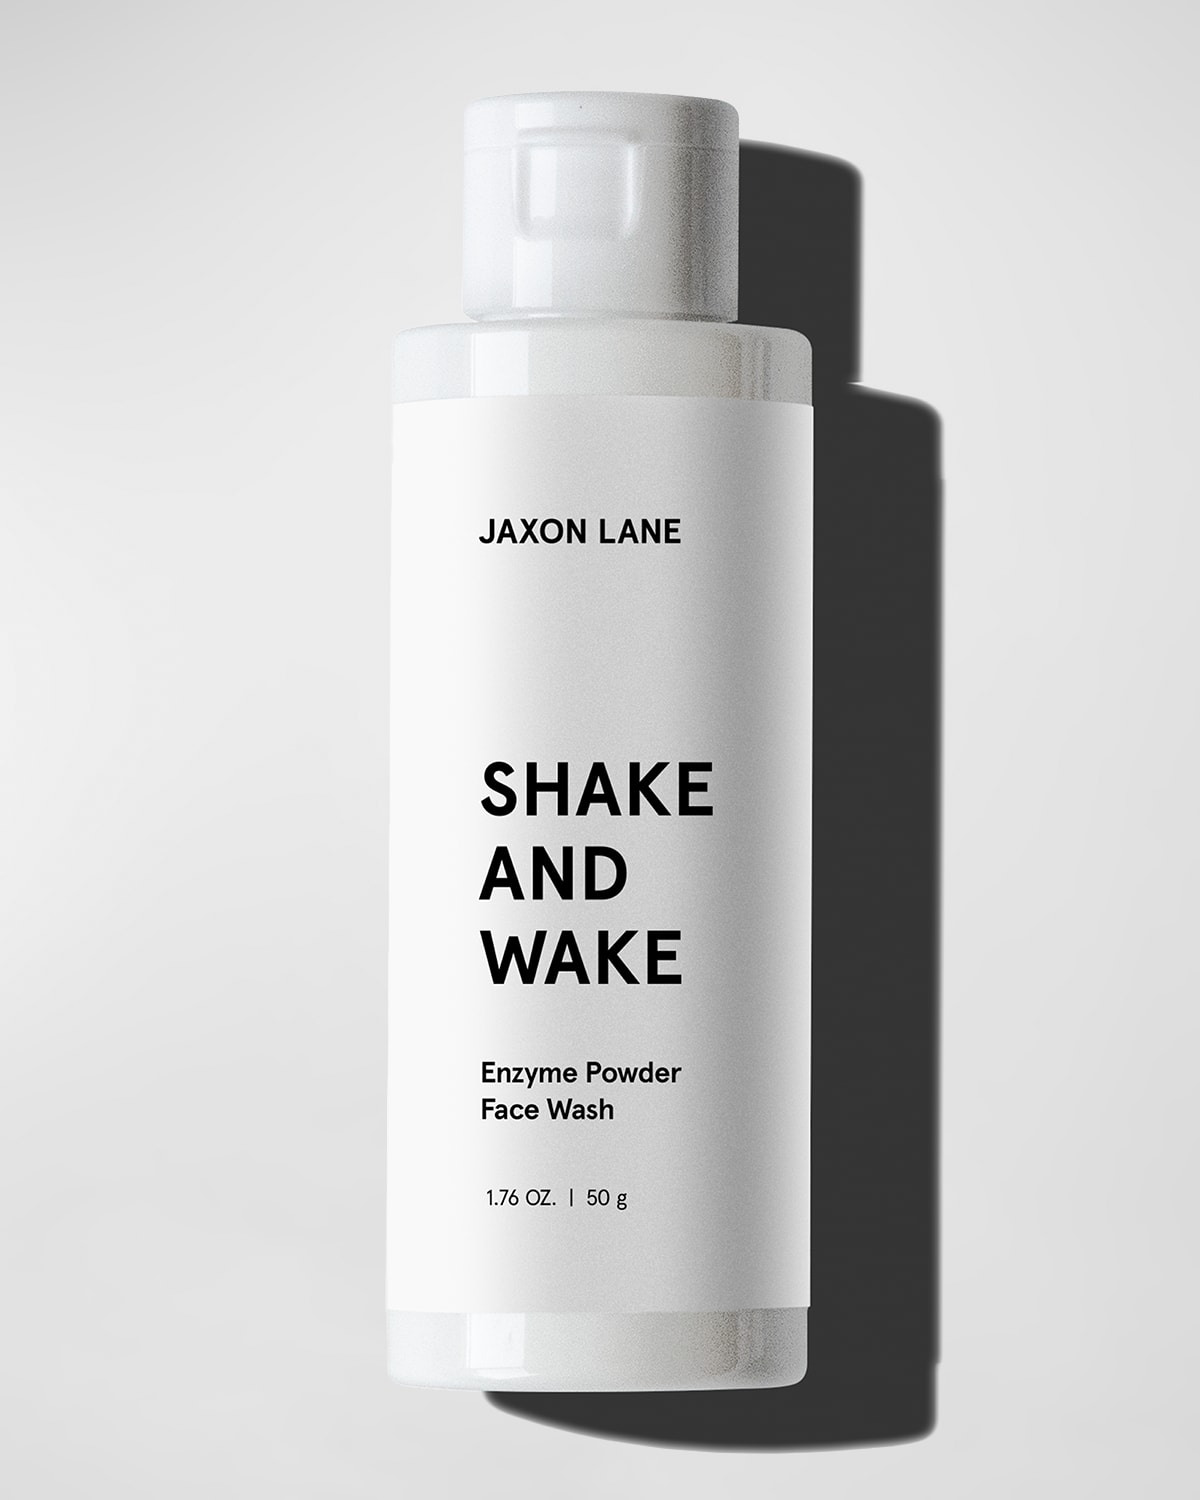 Jaxon Lane Shake & Wake Exfoliating Enzyme Powder Face Wash, 1.7 oz.